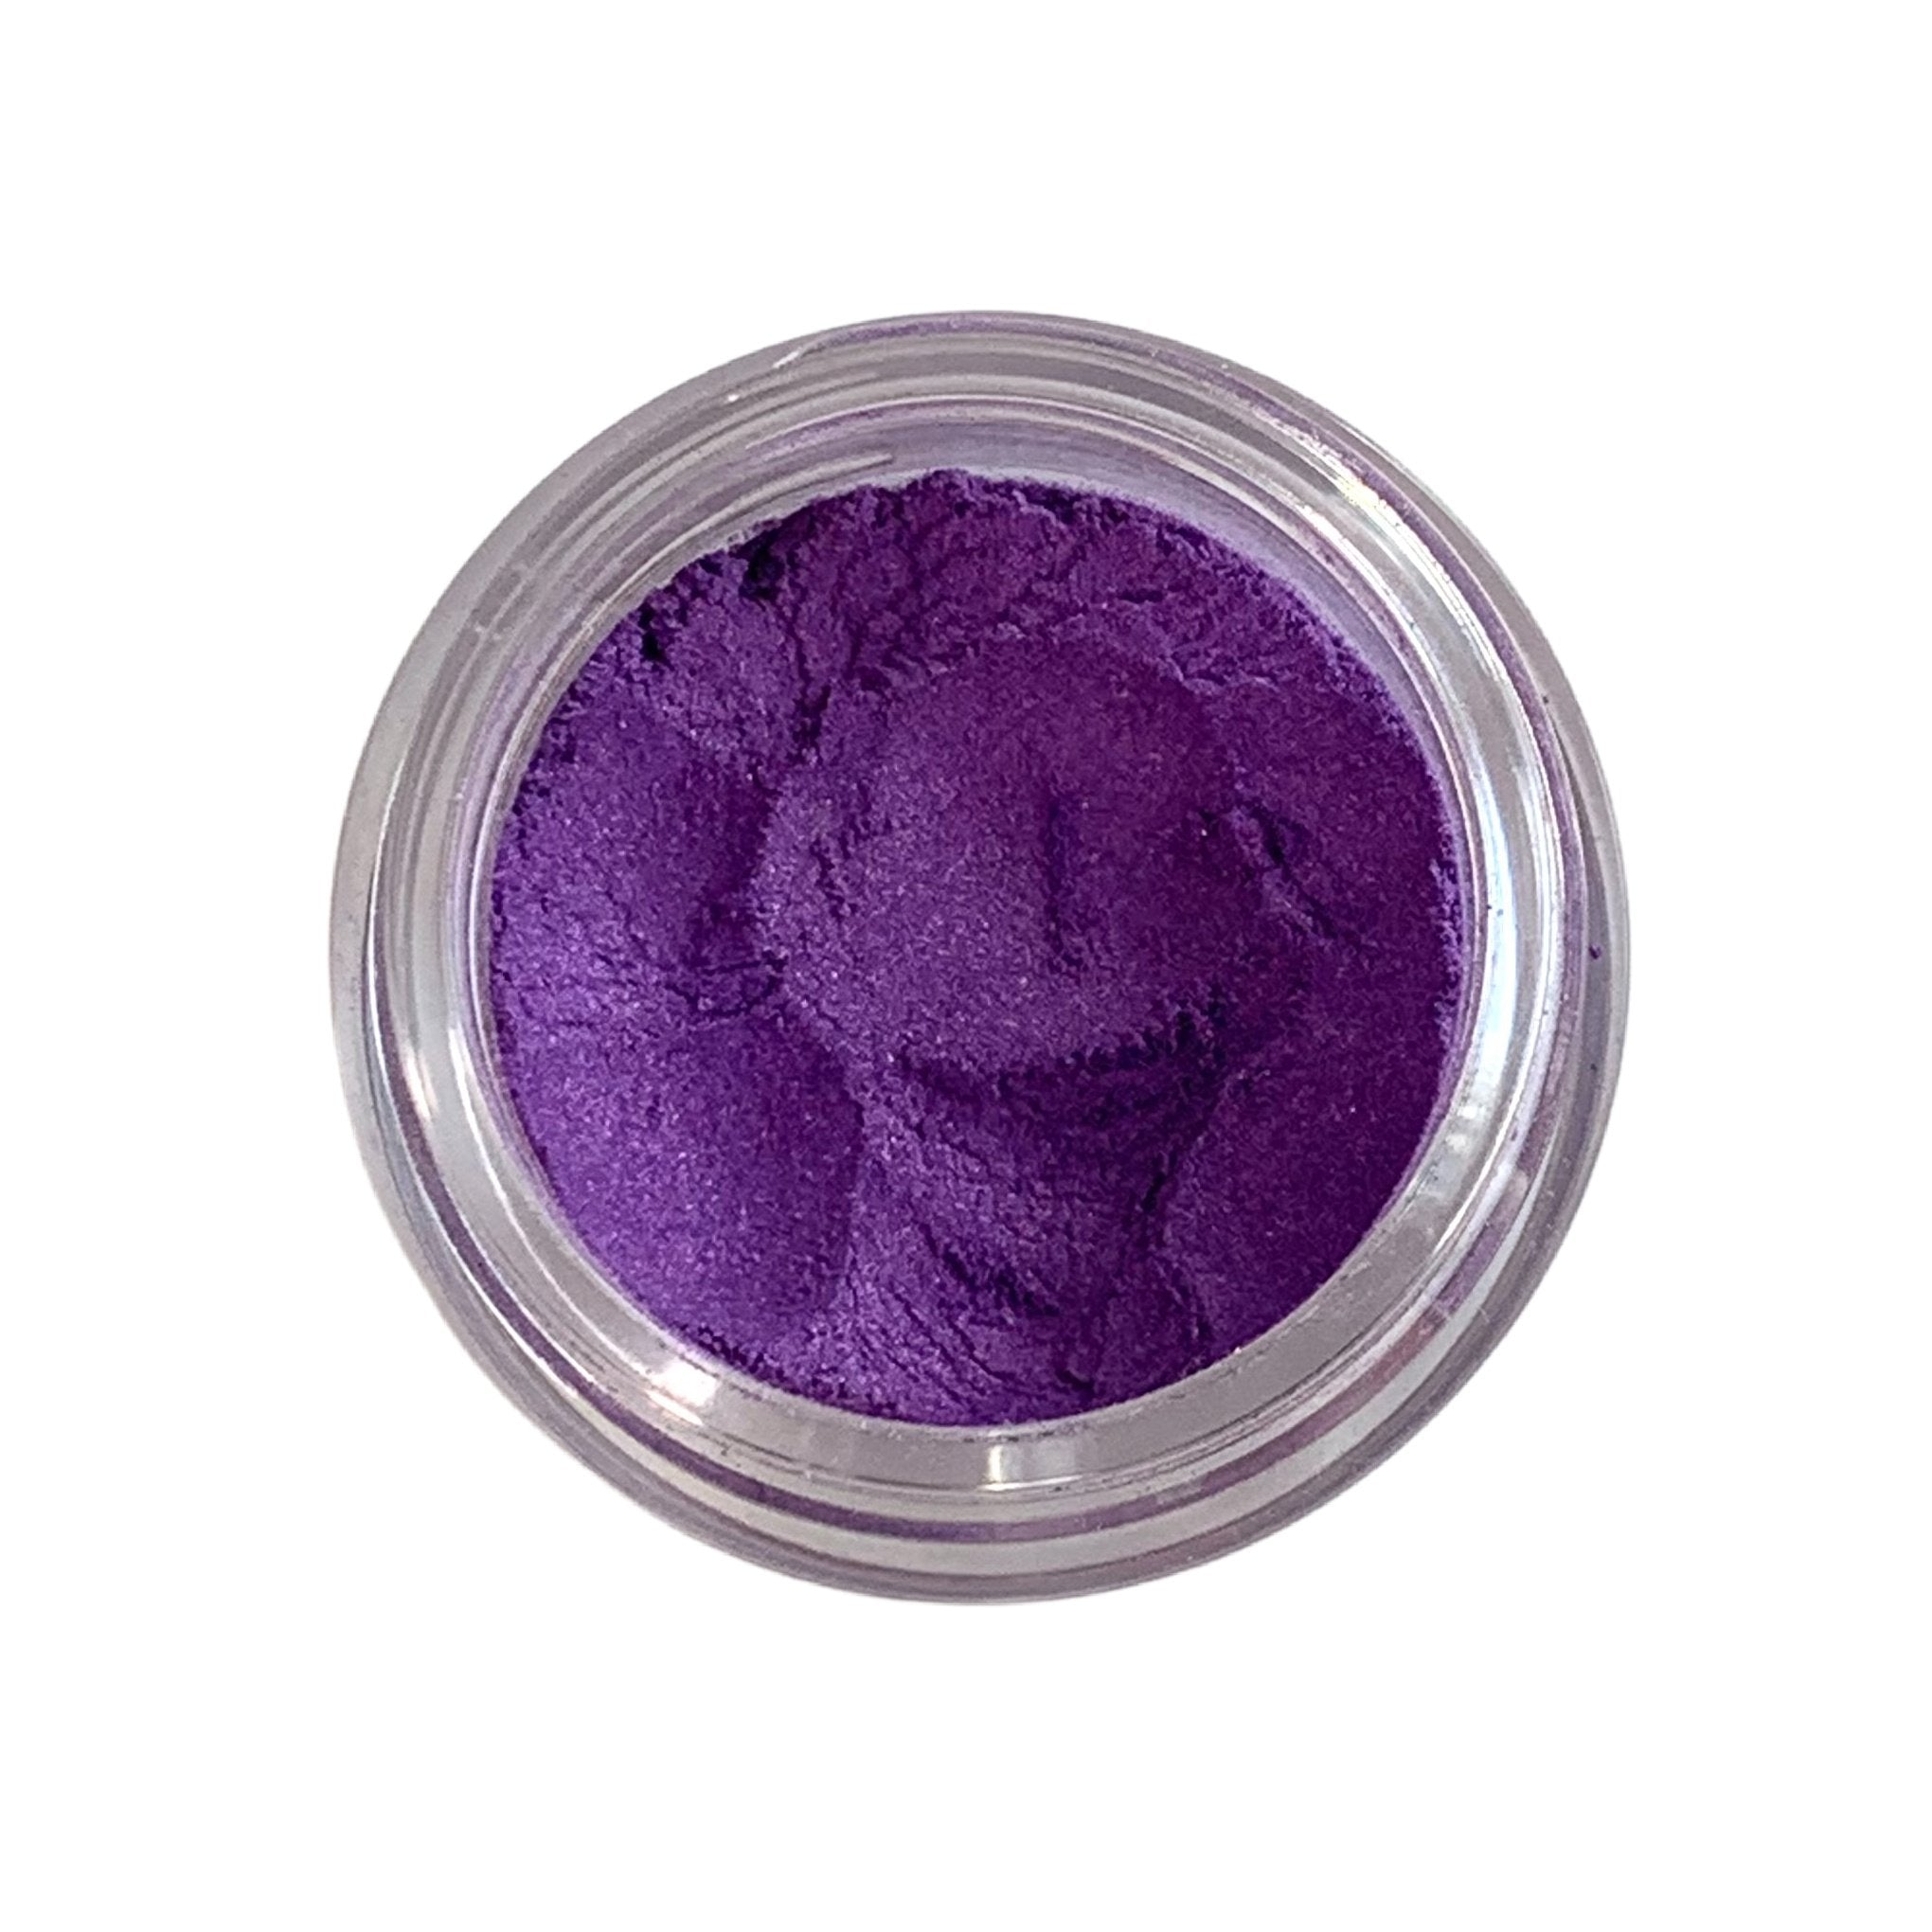 Amethyst loose mica eyeshadow - a mid-purple shimmery eyeshadow, vegan and cruelty free.